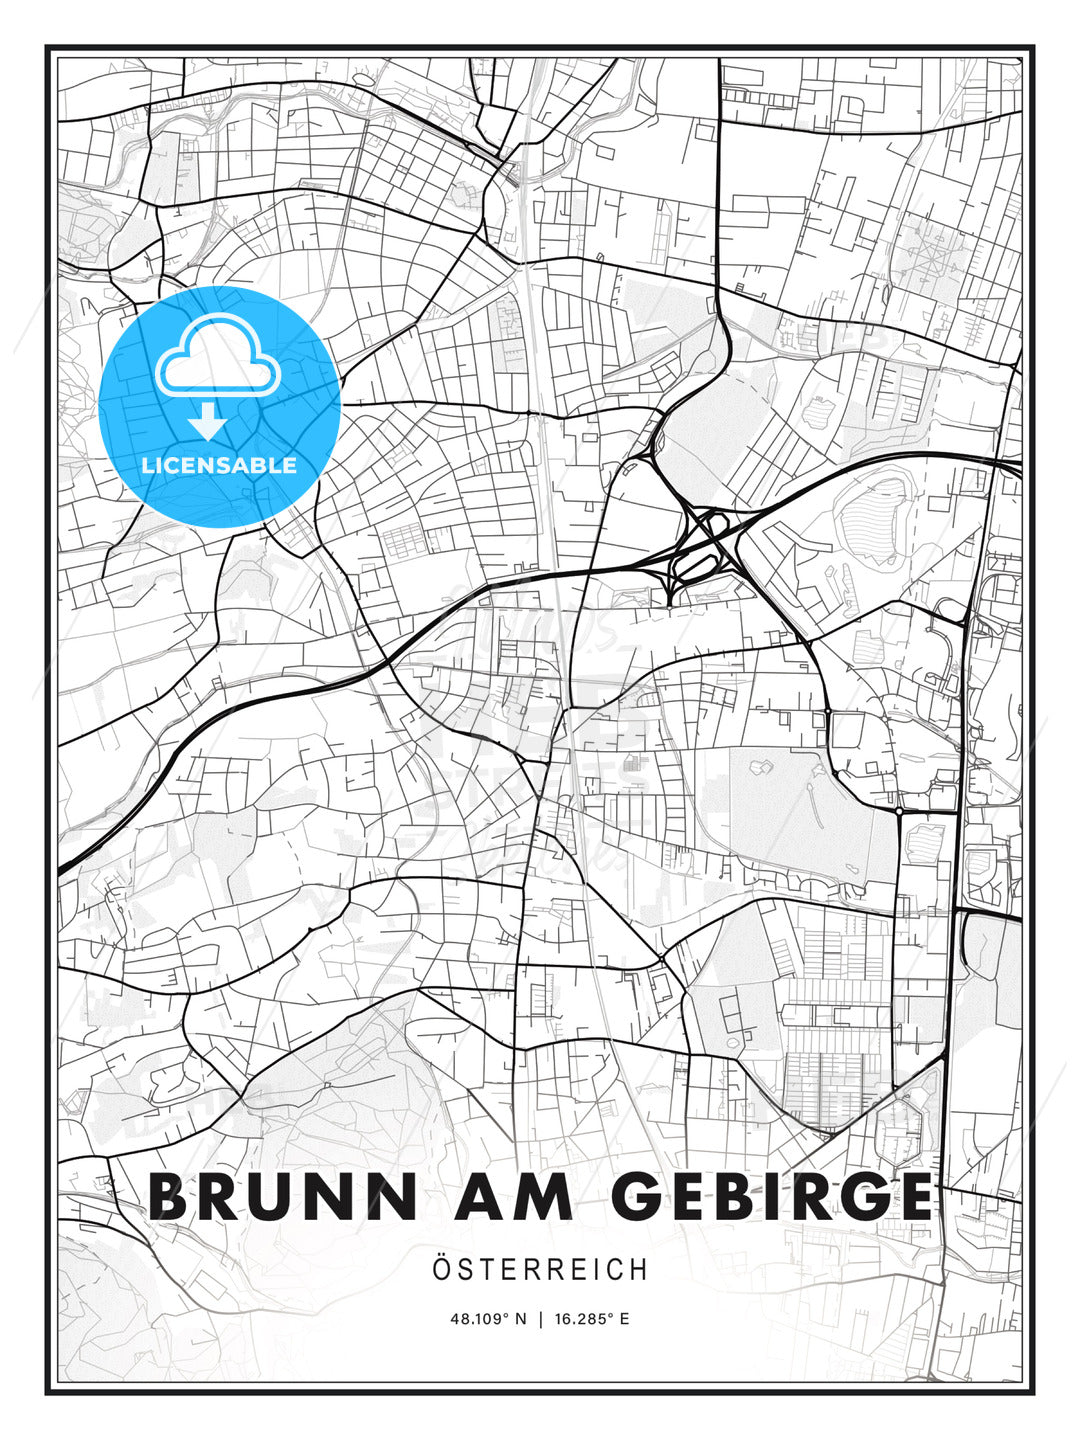 Brunn am Gebirge, Austria, Modern Print Template in Various Formats - HEBSTREITS Sketches